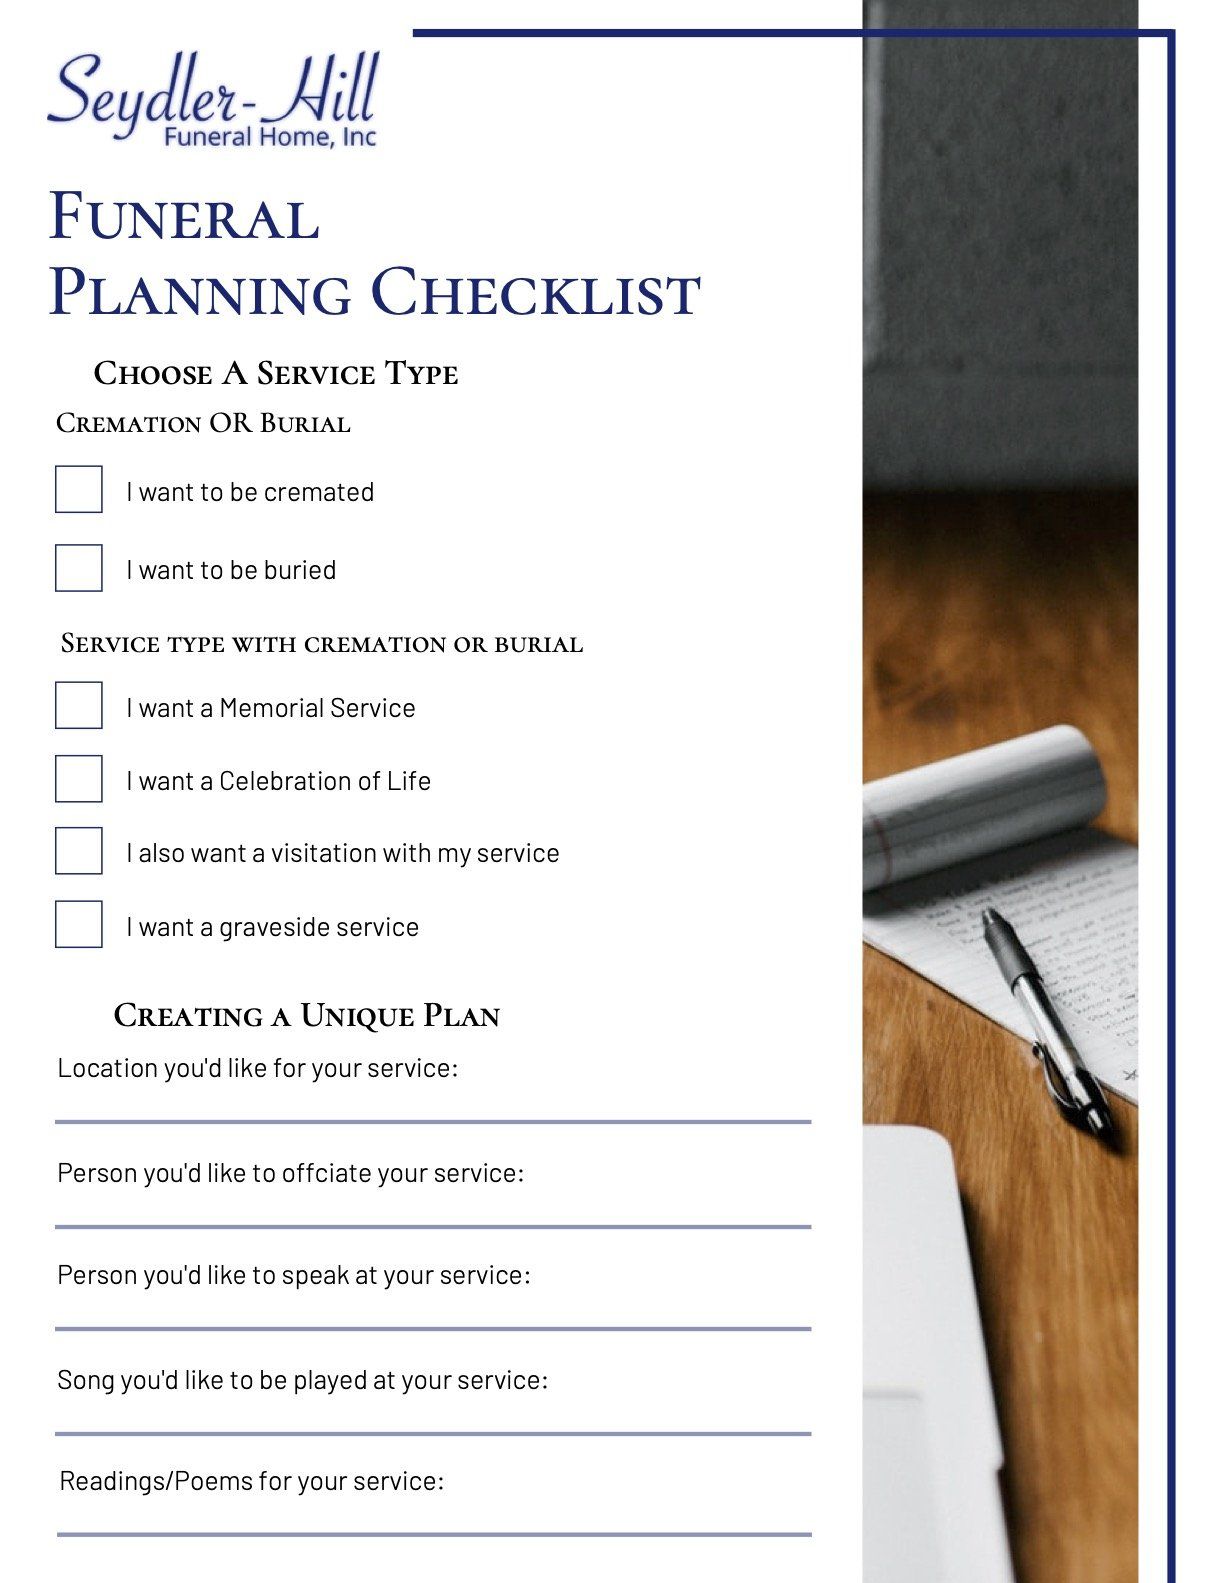 Seydler-Hill Funeral Pre-Planning Checklist